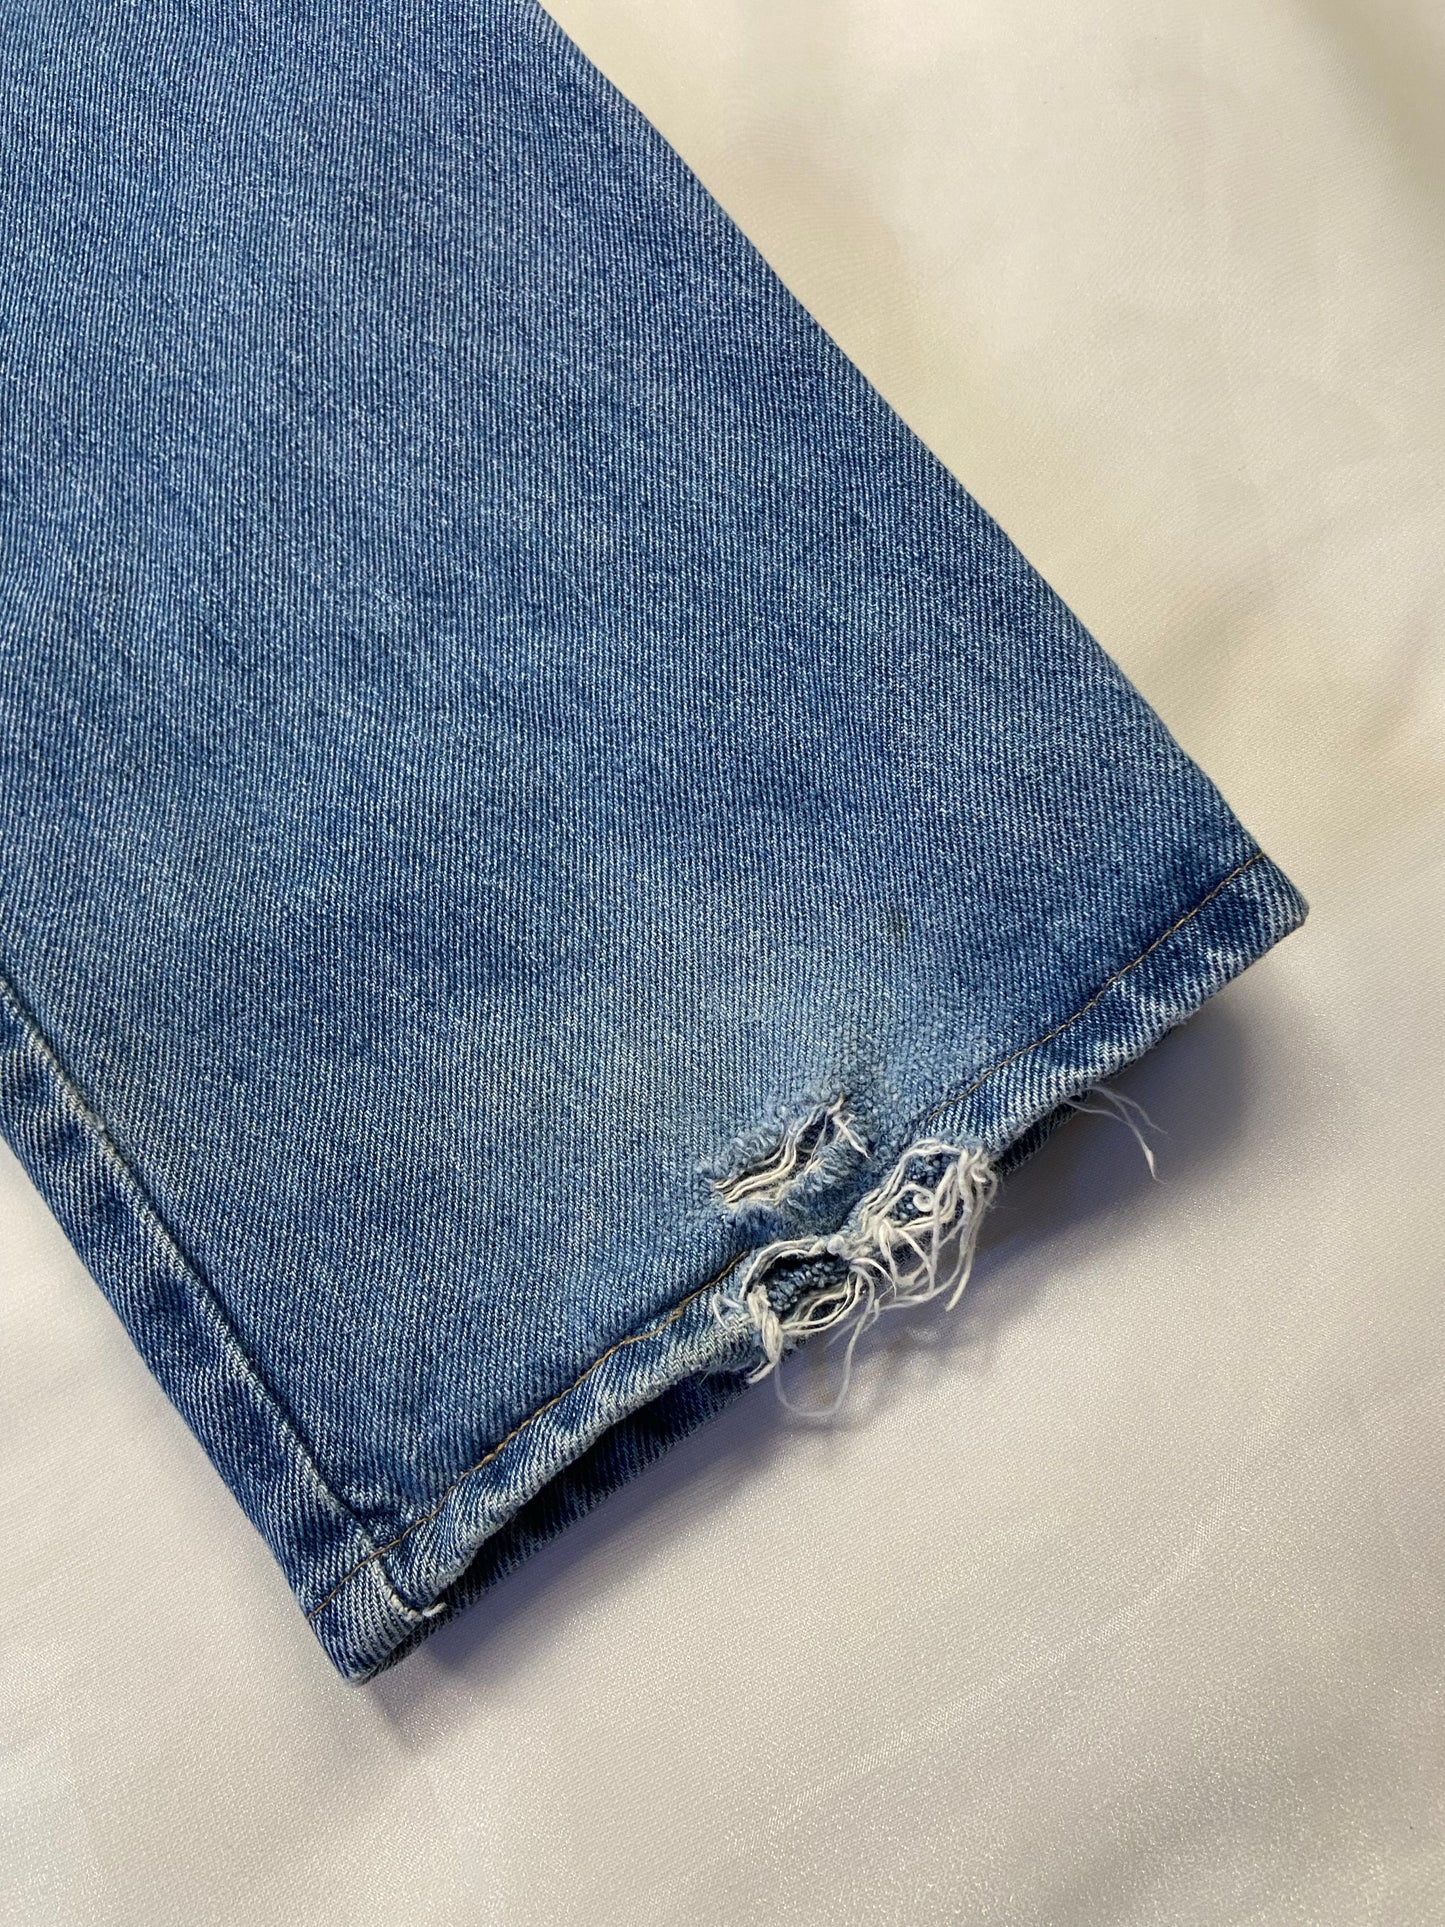 Medium Wash Wrangler Jeans - 32”